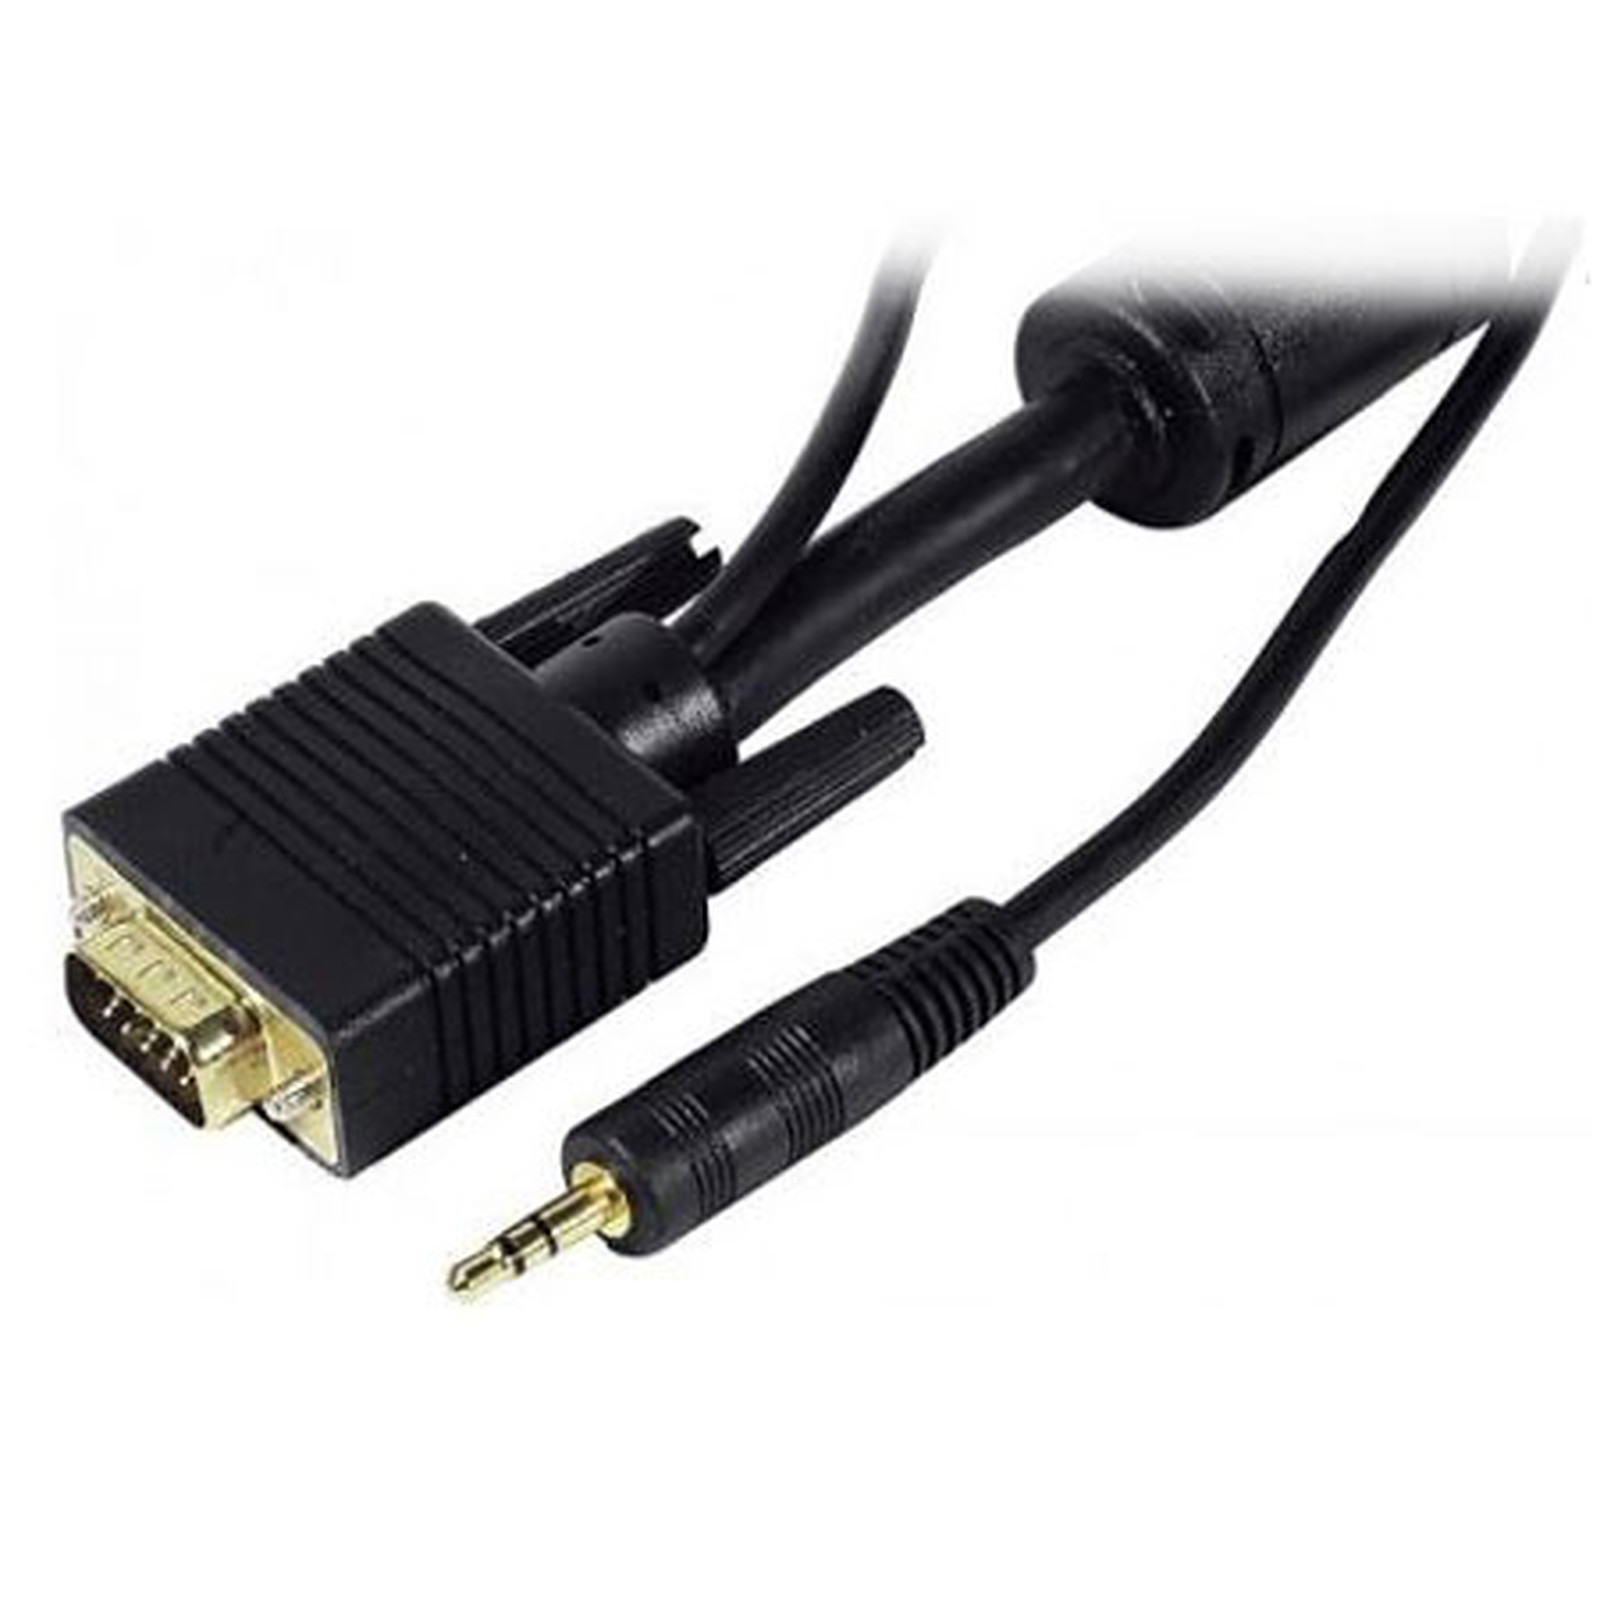 Cable VGA + Jack male / male (5 mètres) - VGA Generique